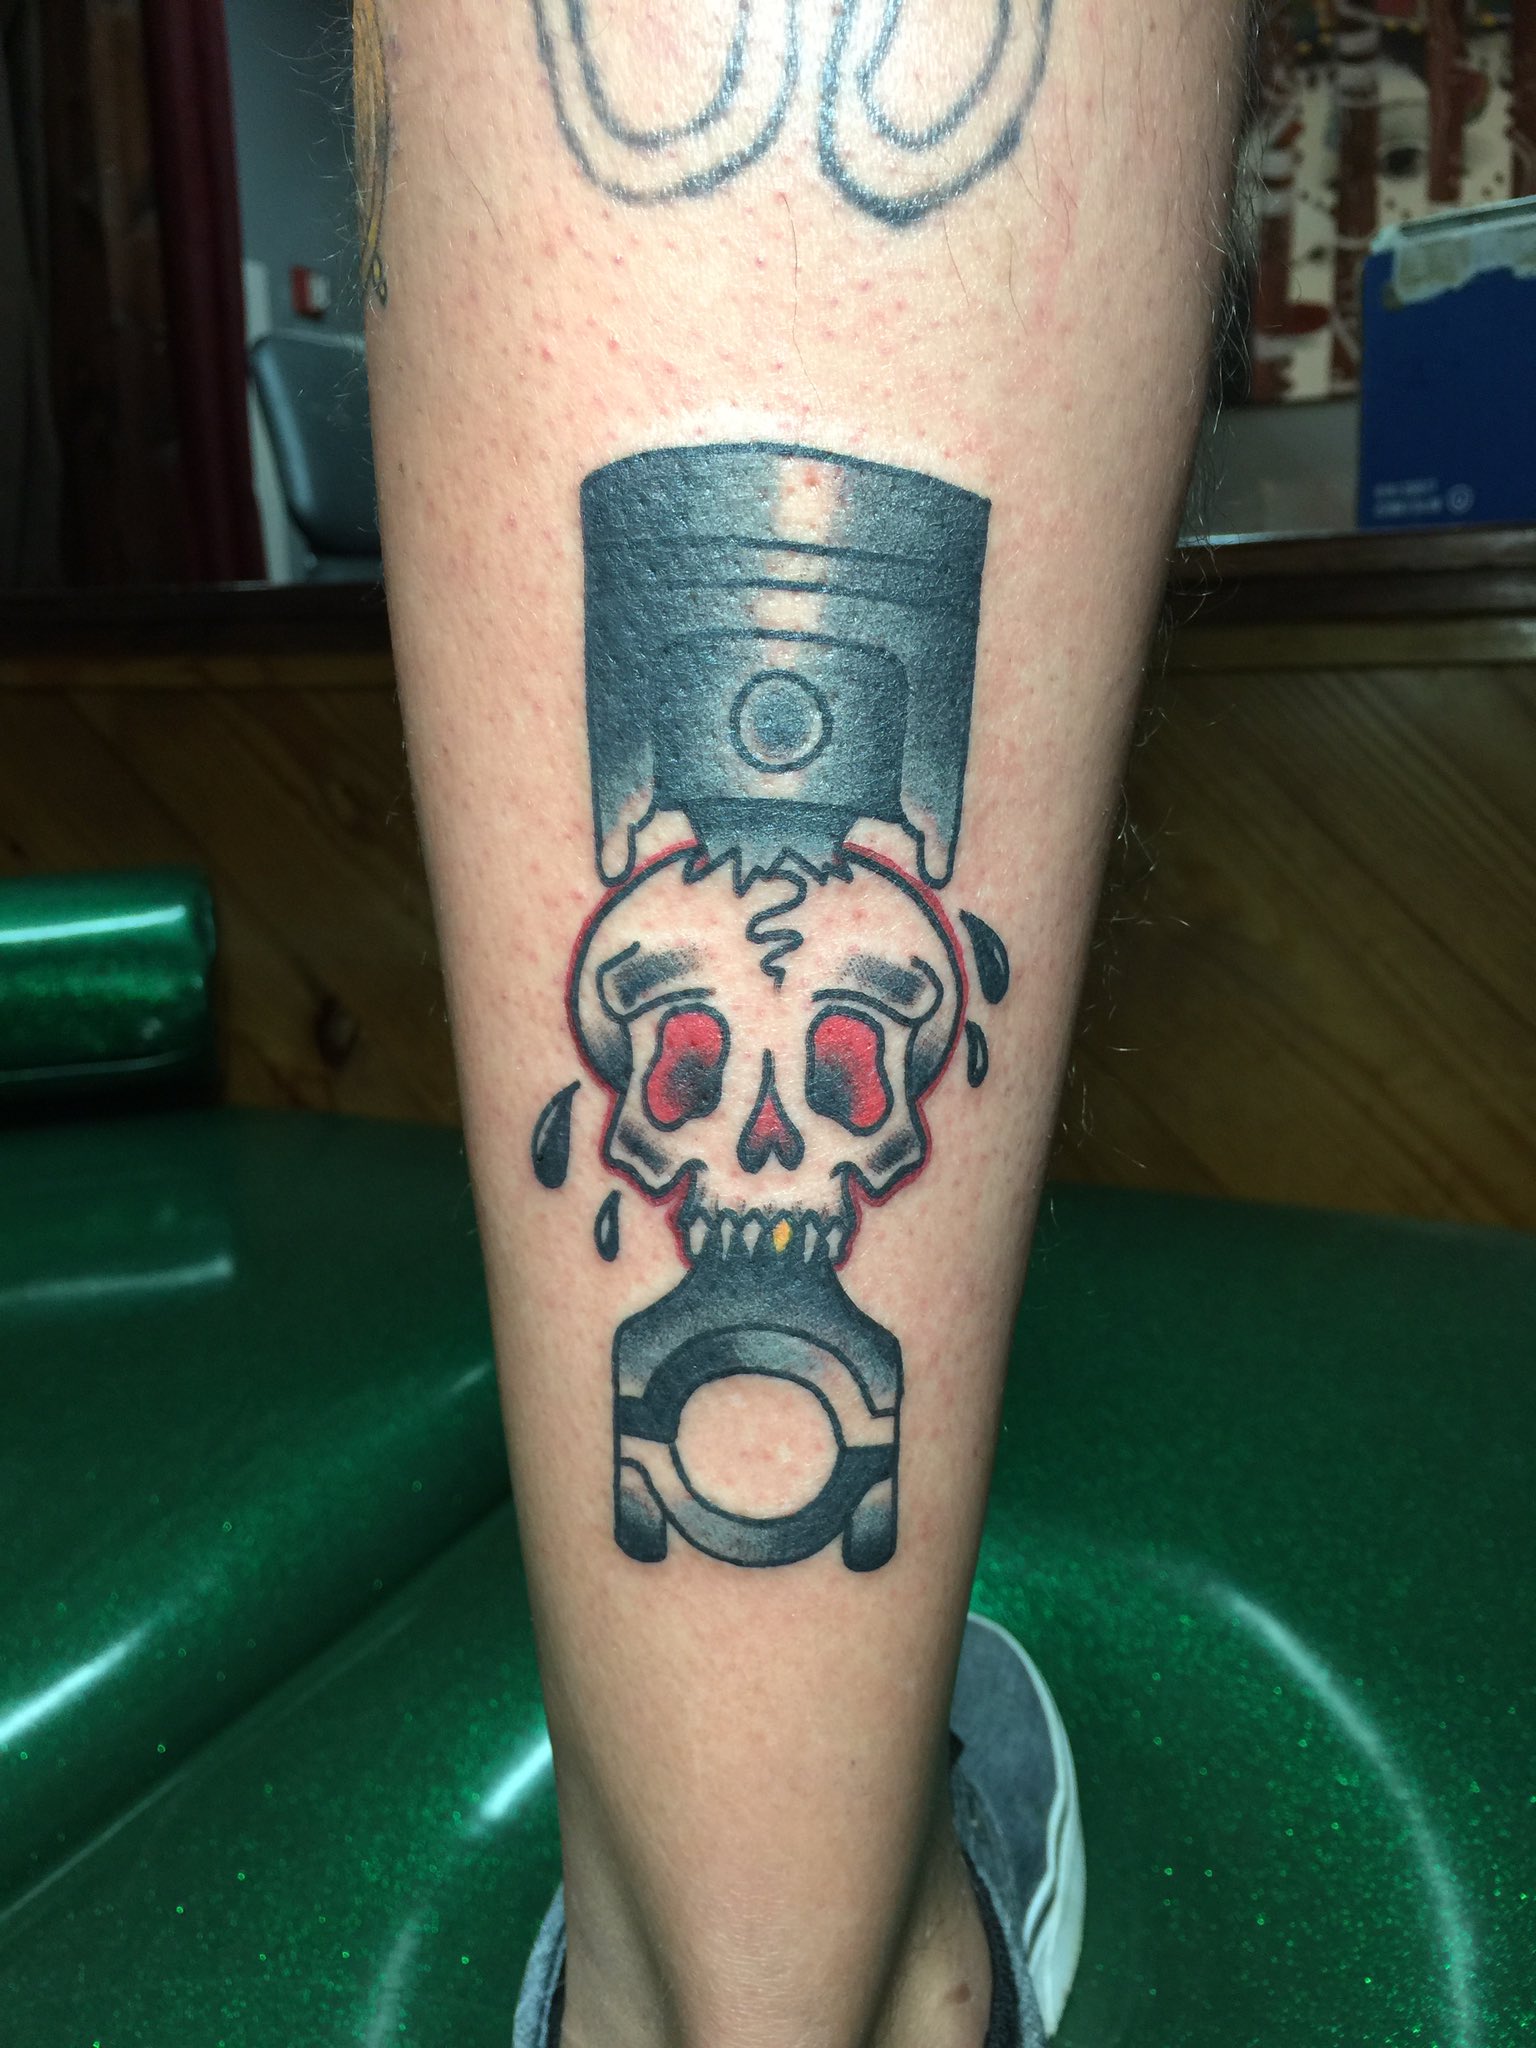 pistons tattoo by karlinoboy on DeviantArt